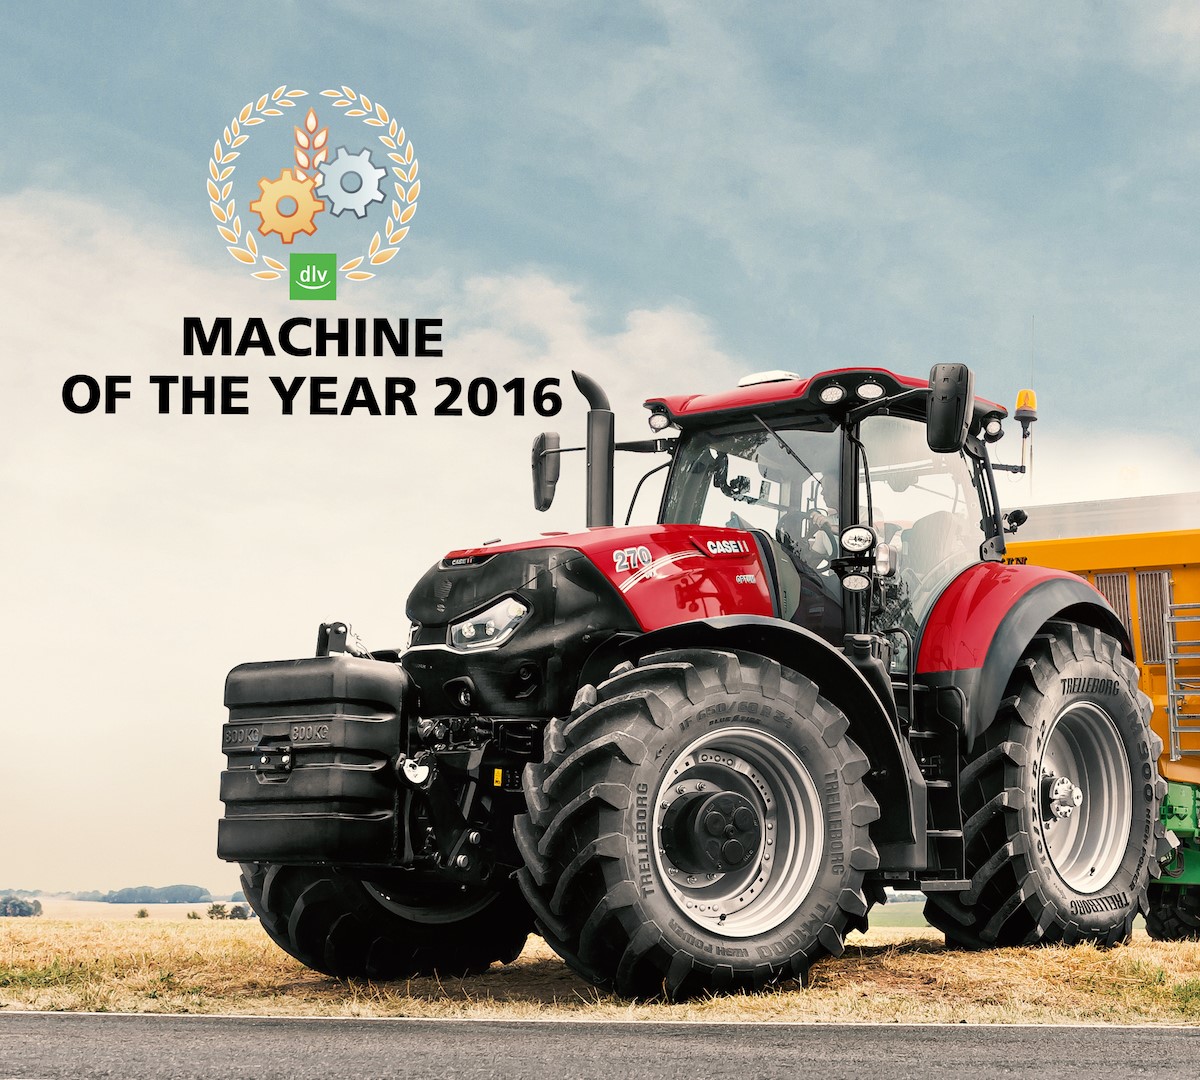 Brand new Optum CVX awarded "Machine of the Year 2016“